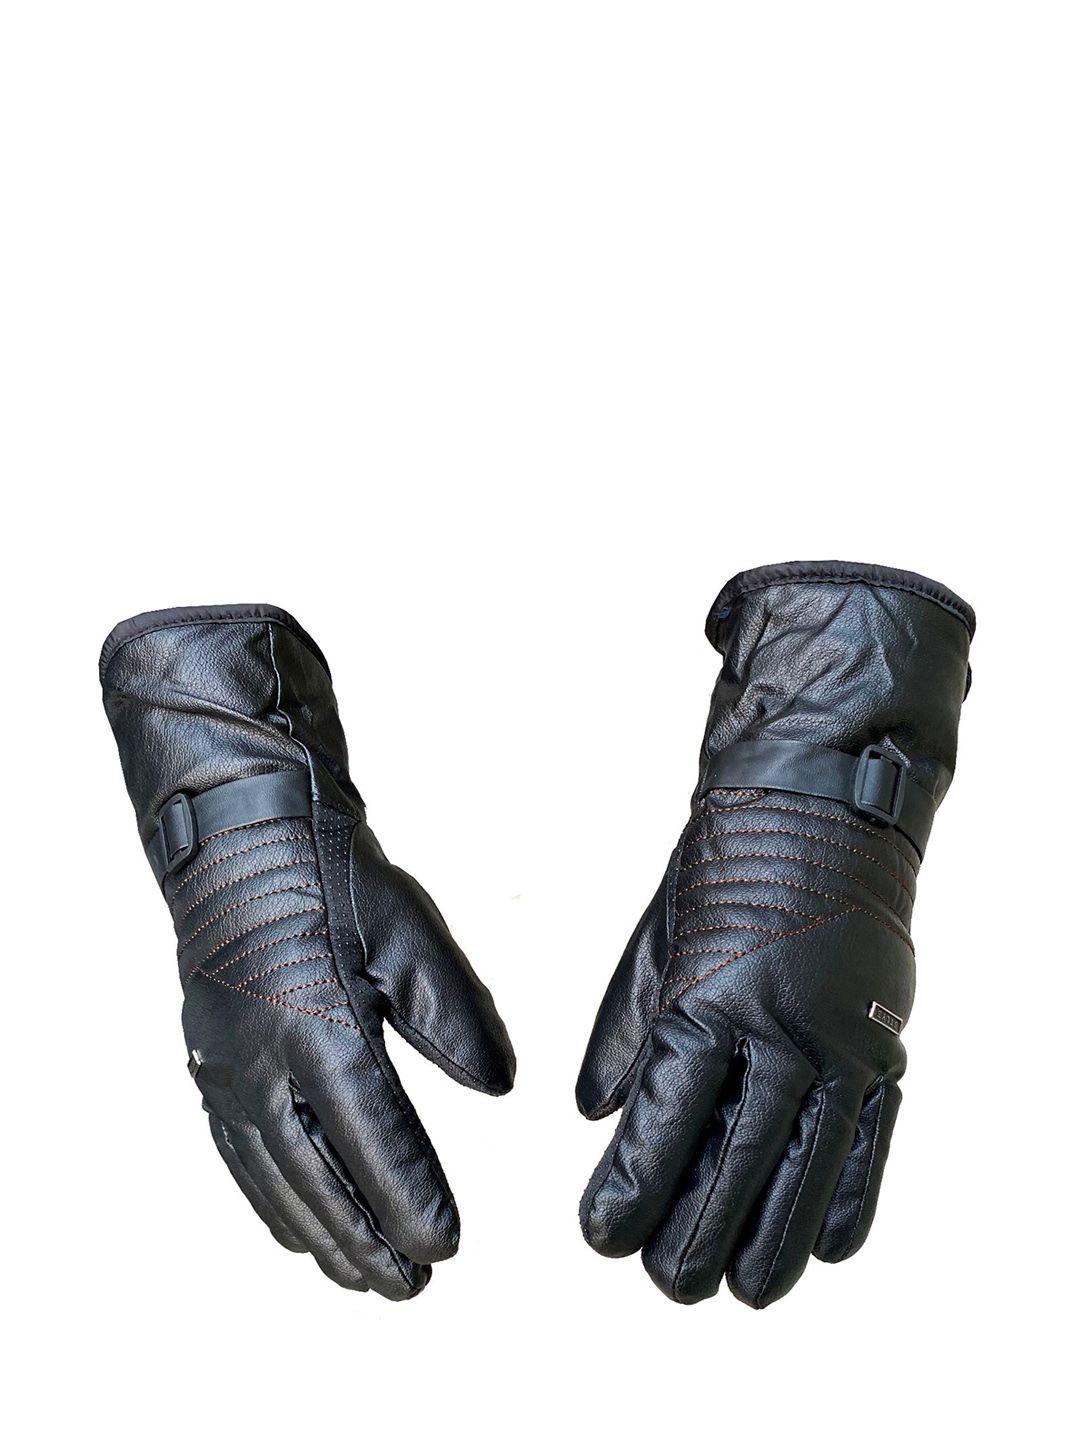 alexvyan men leather winter protective gloves